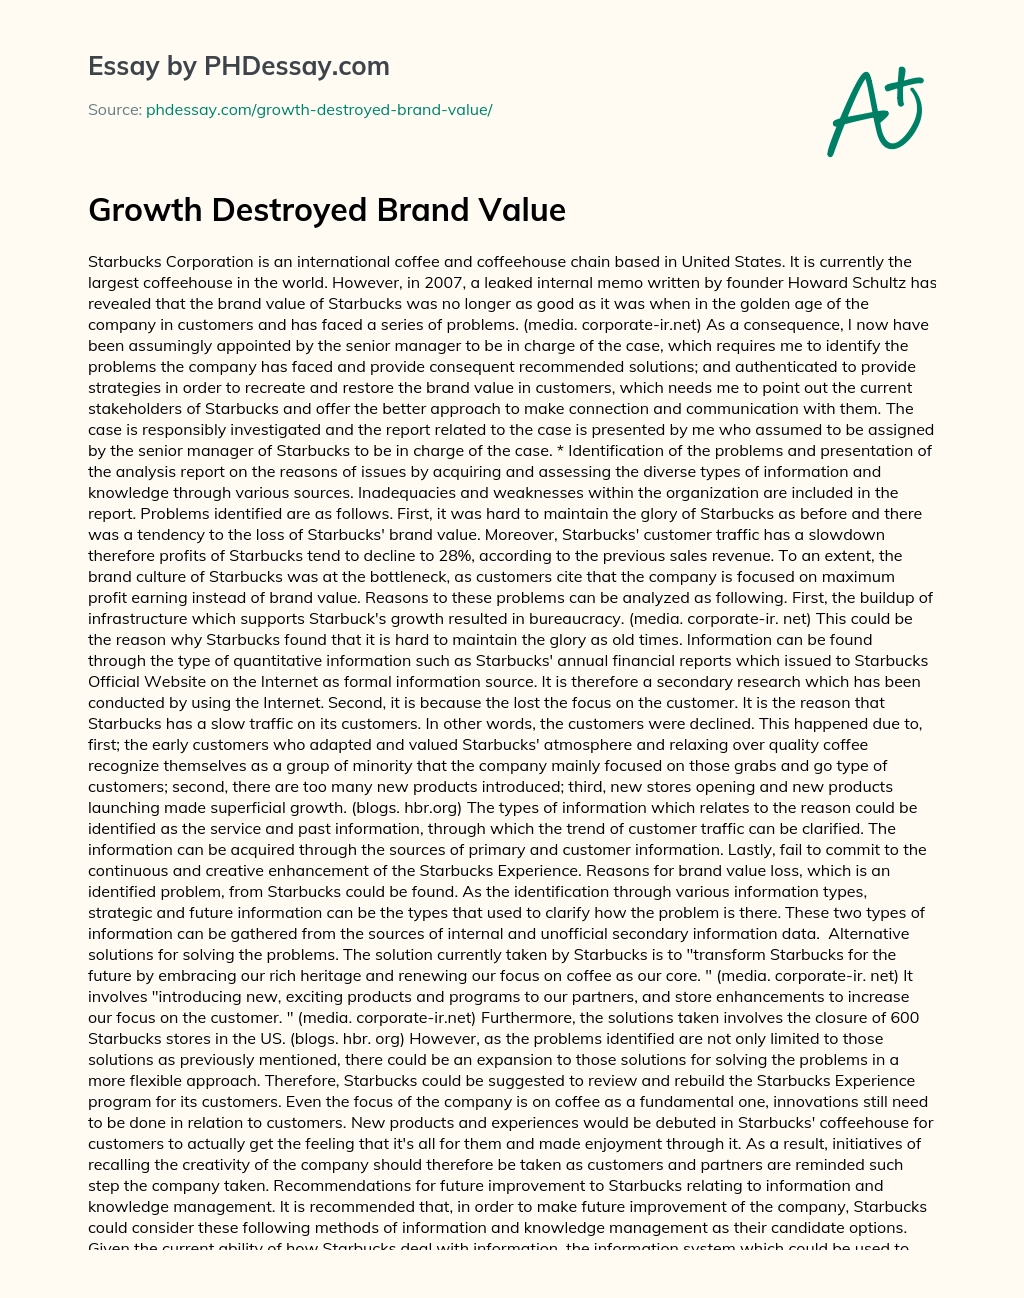 Growth Destroyed Brand Value essay